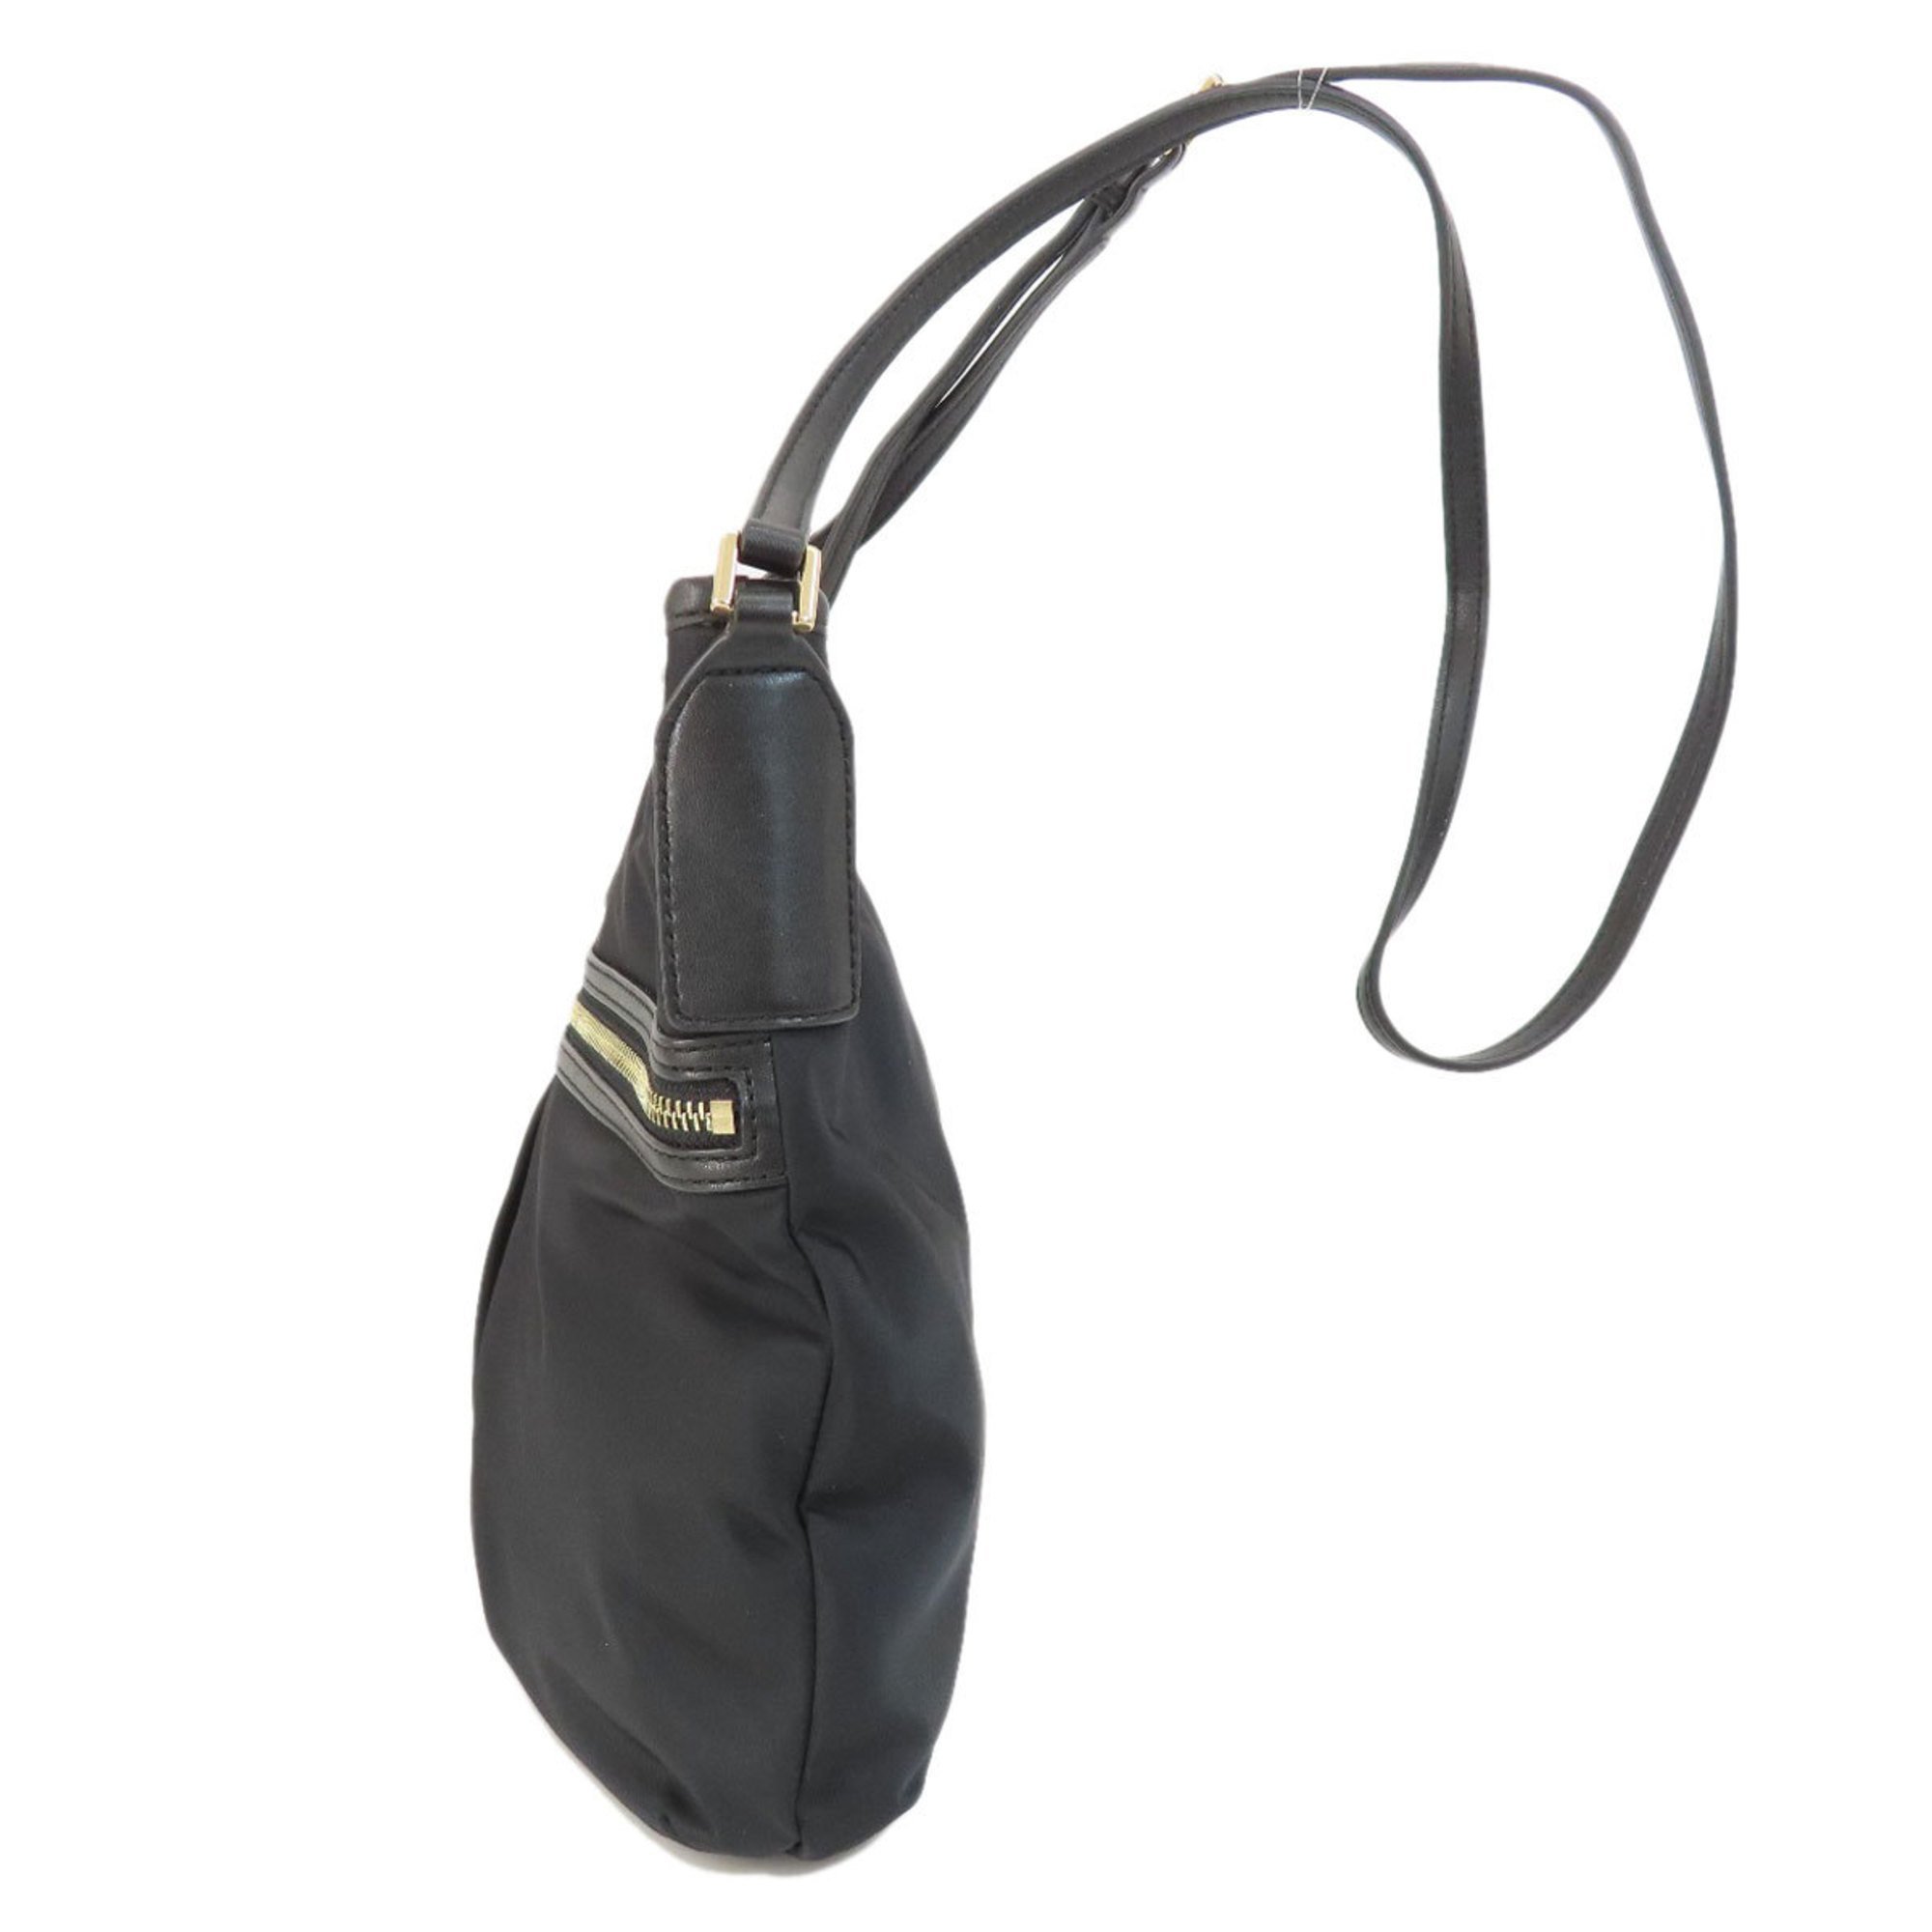 Tory Burch shoulder bag, nylon material, women's